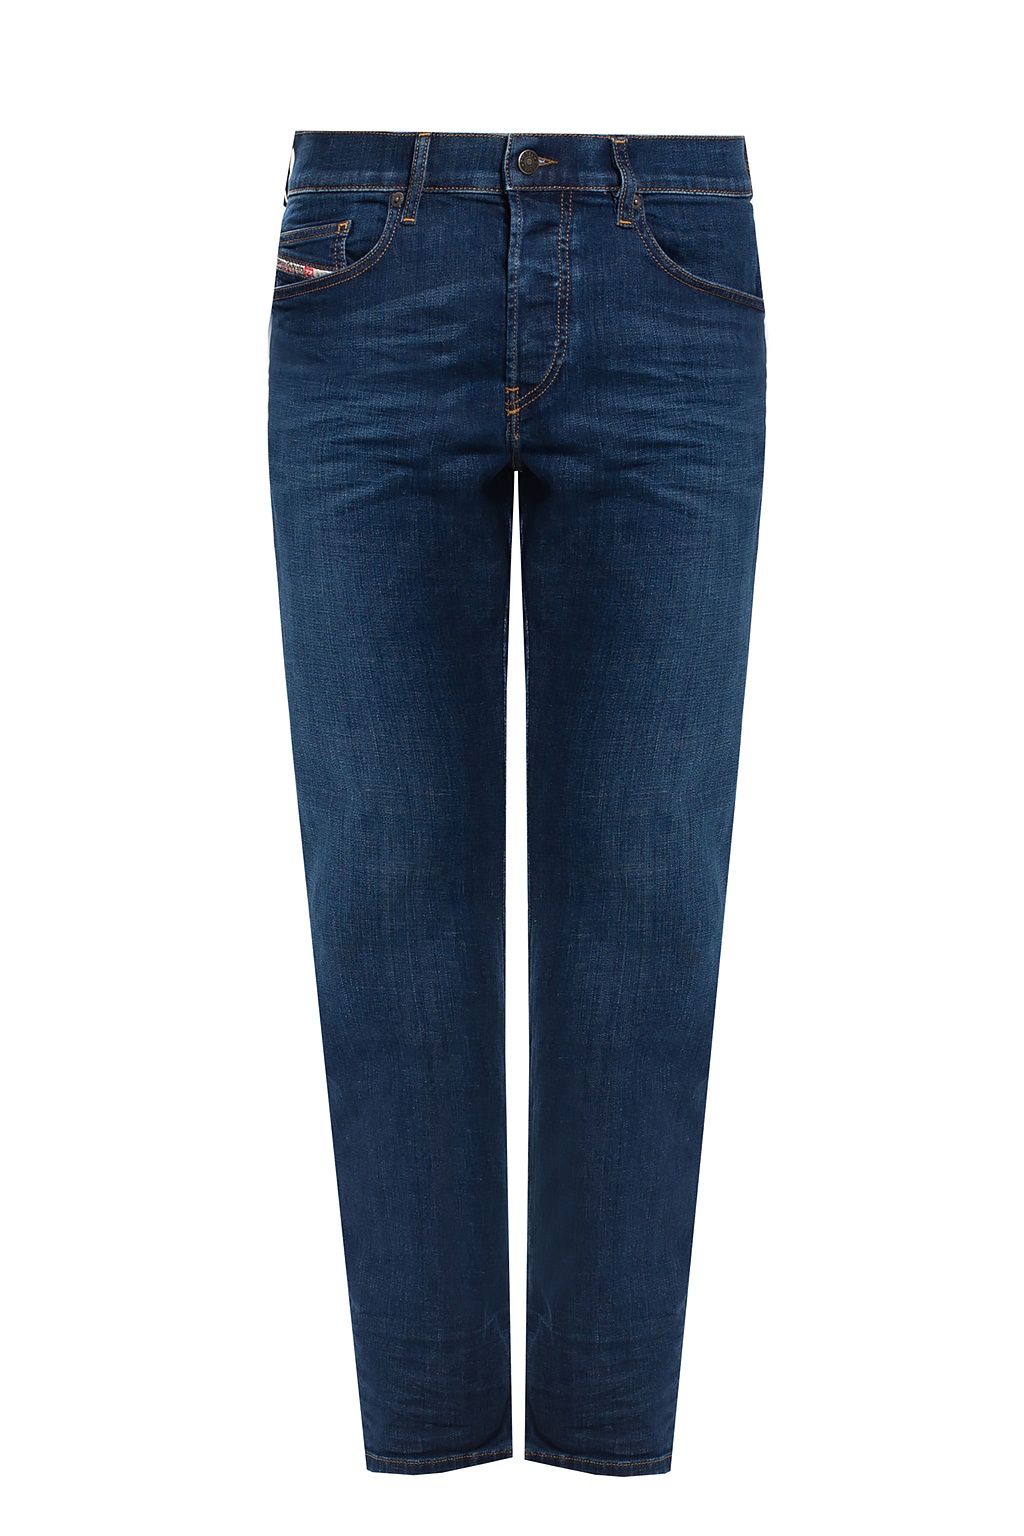 IetpShops | Diesel 'D - Men's Clothing | Шапка pepe jeans - Mihtry' jeans